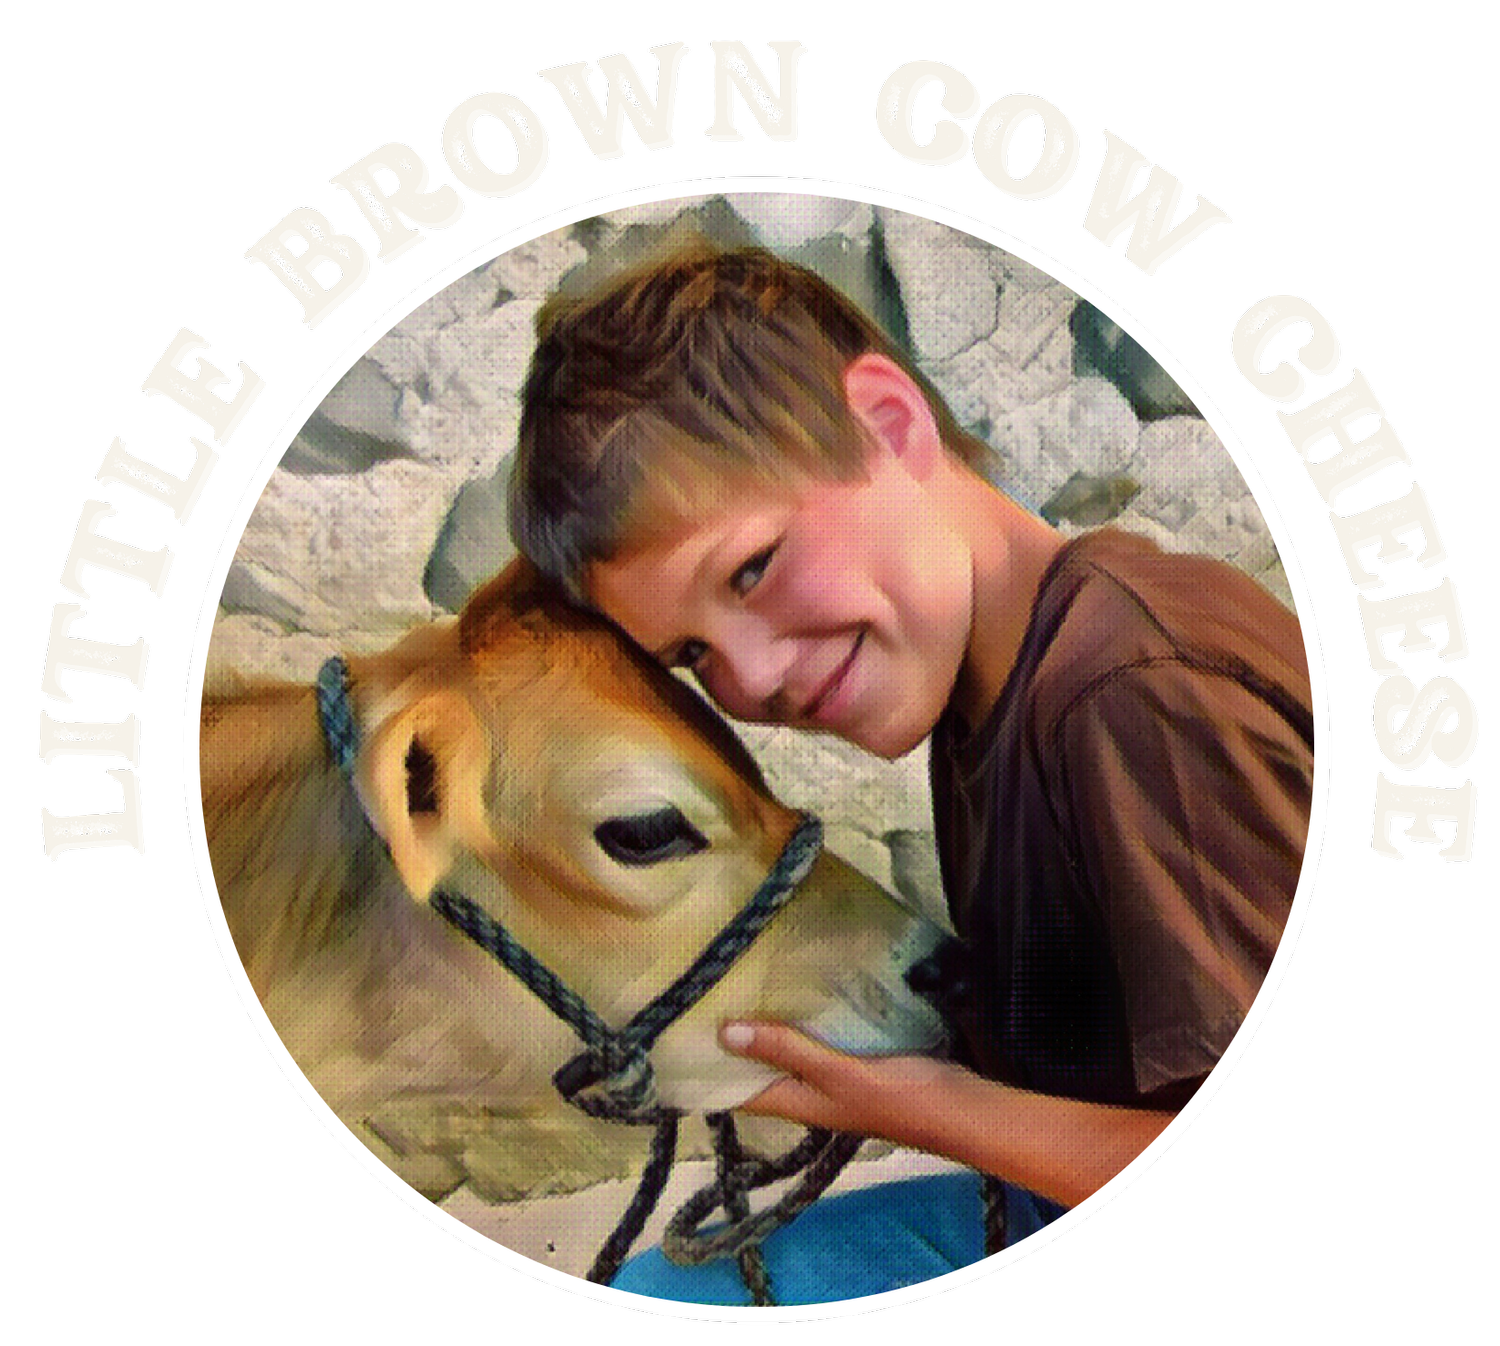 Little Brown Cow Cheese LLC